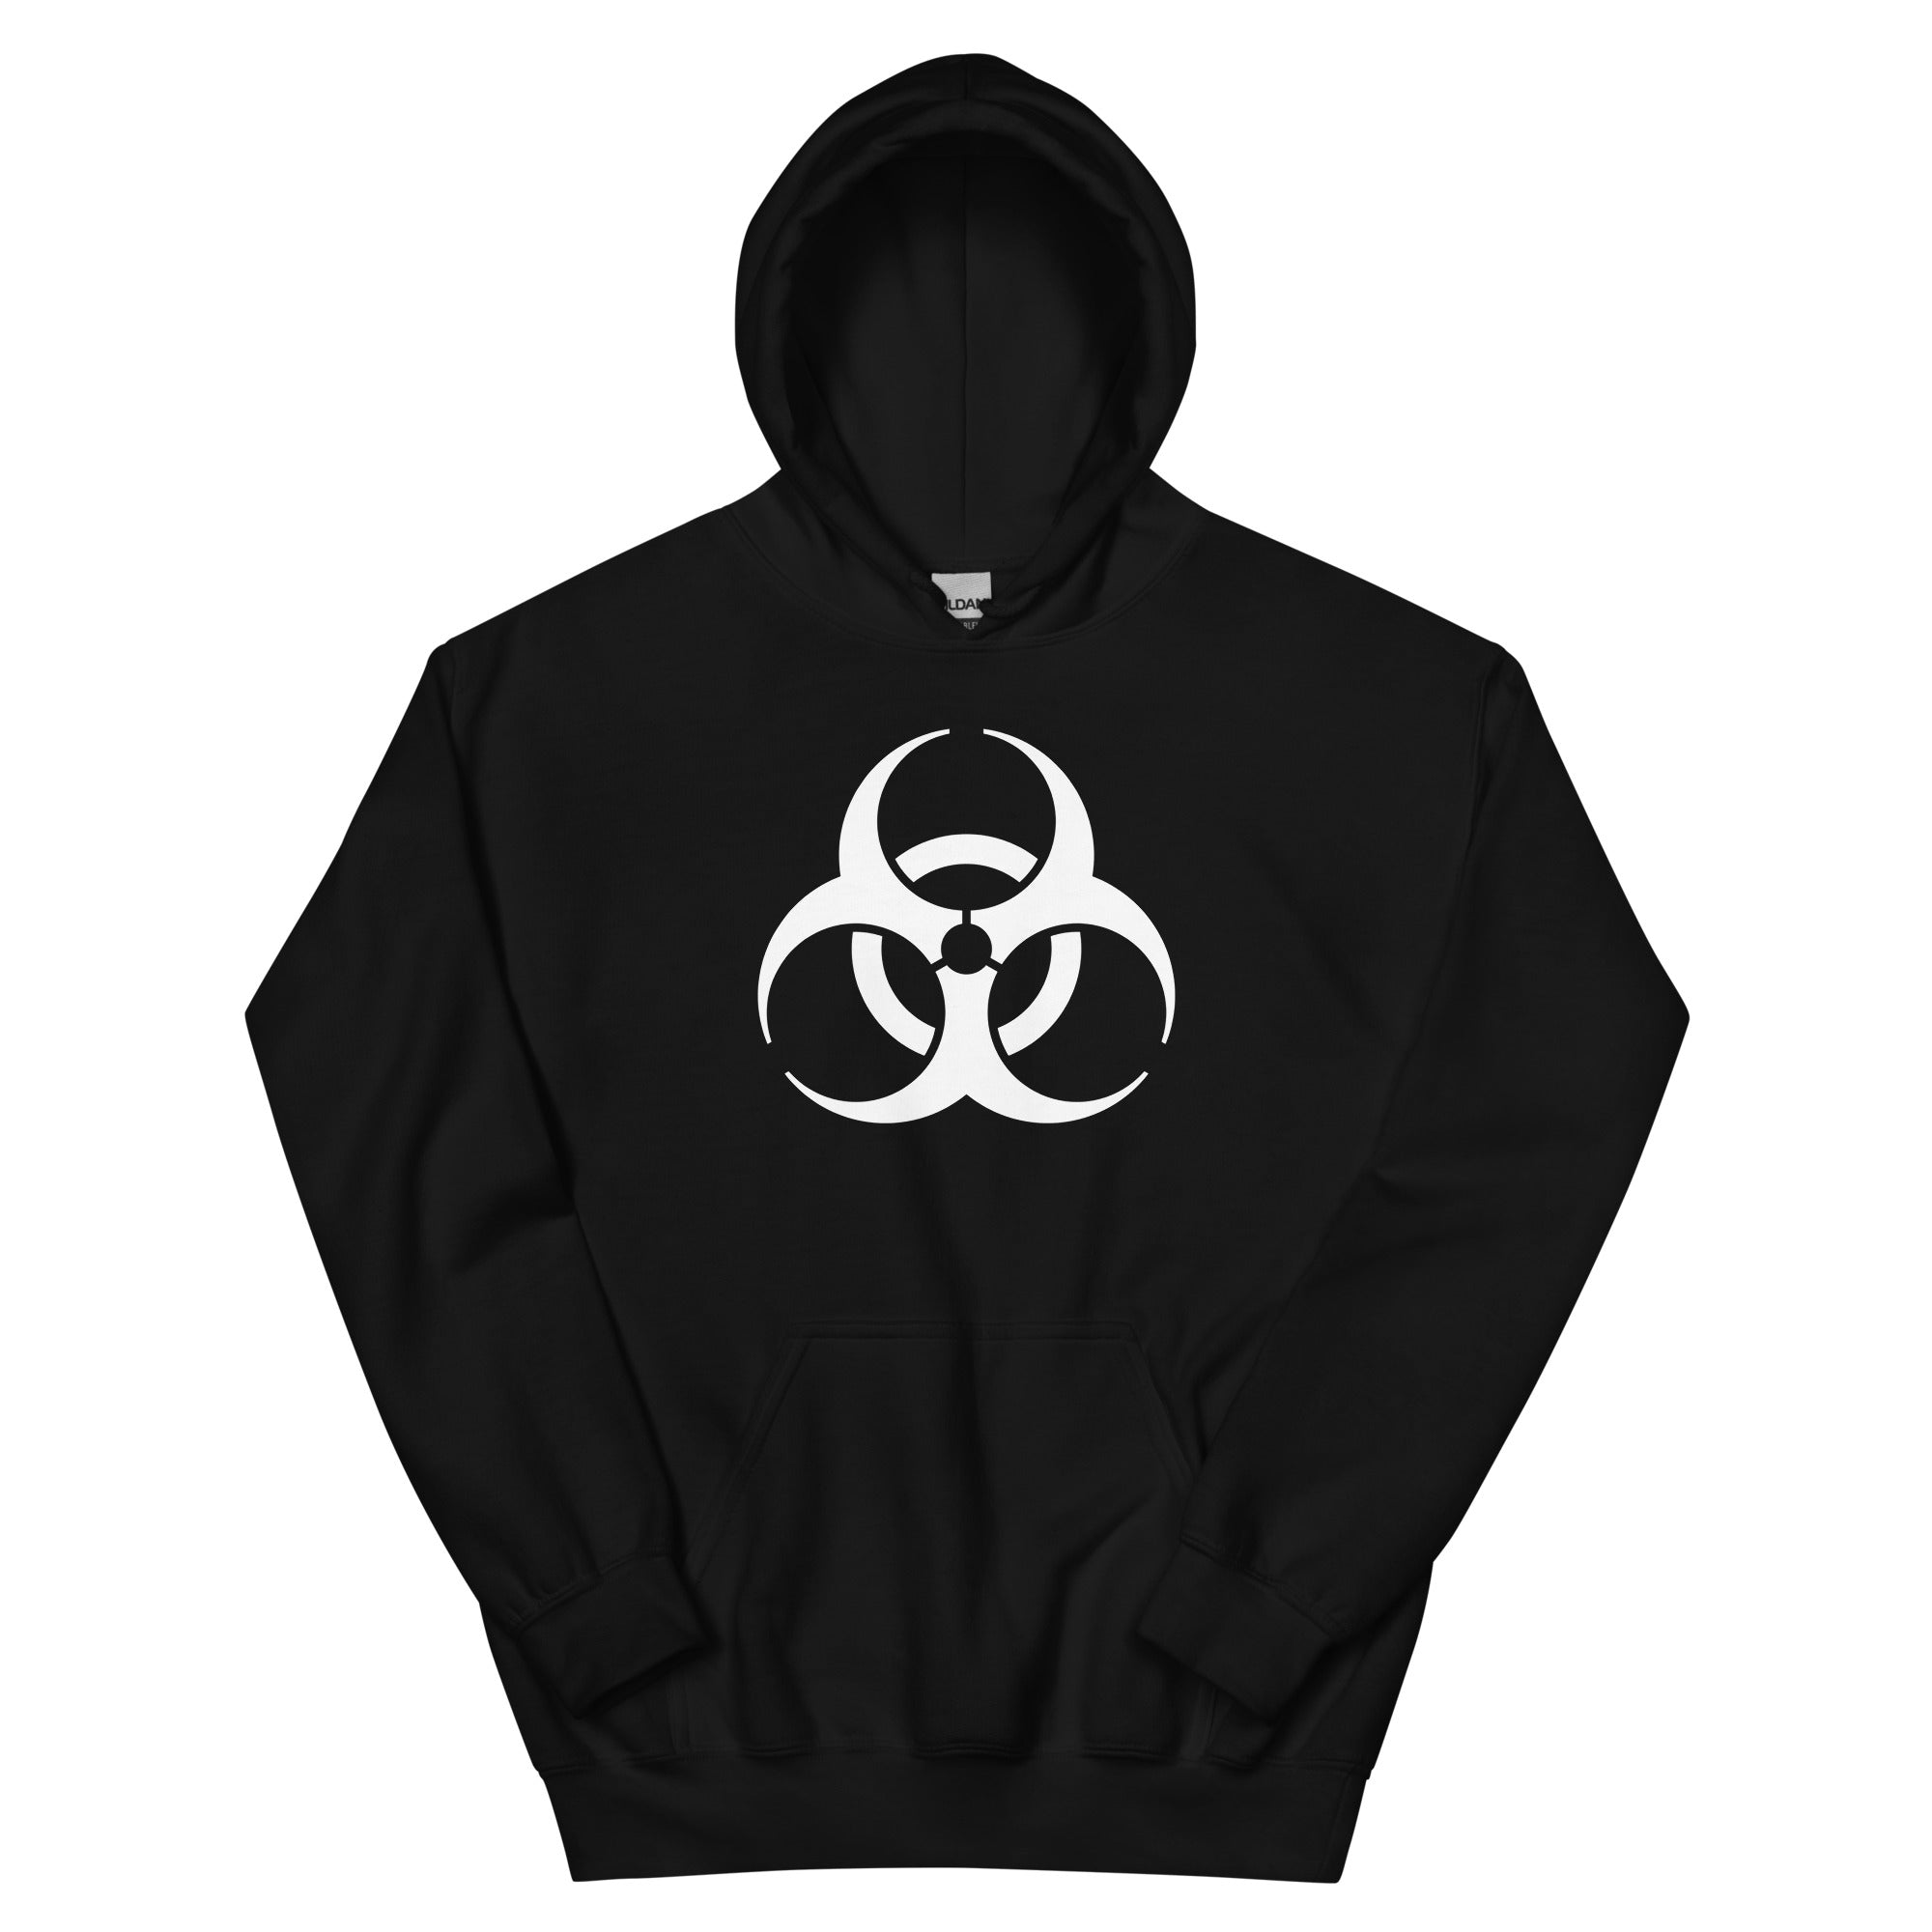 White Biohazard Sign Toxic Chemical Symbol Unisex Hoodie Sweatshirt - Edge of Life Designs